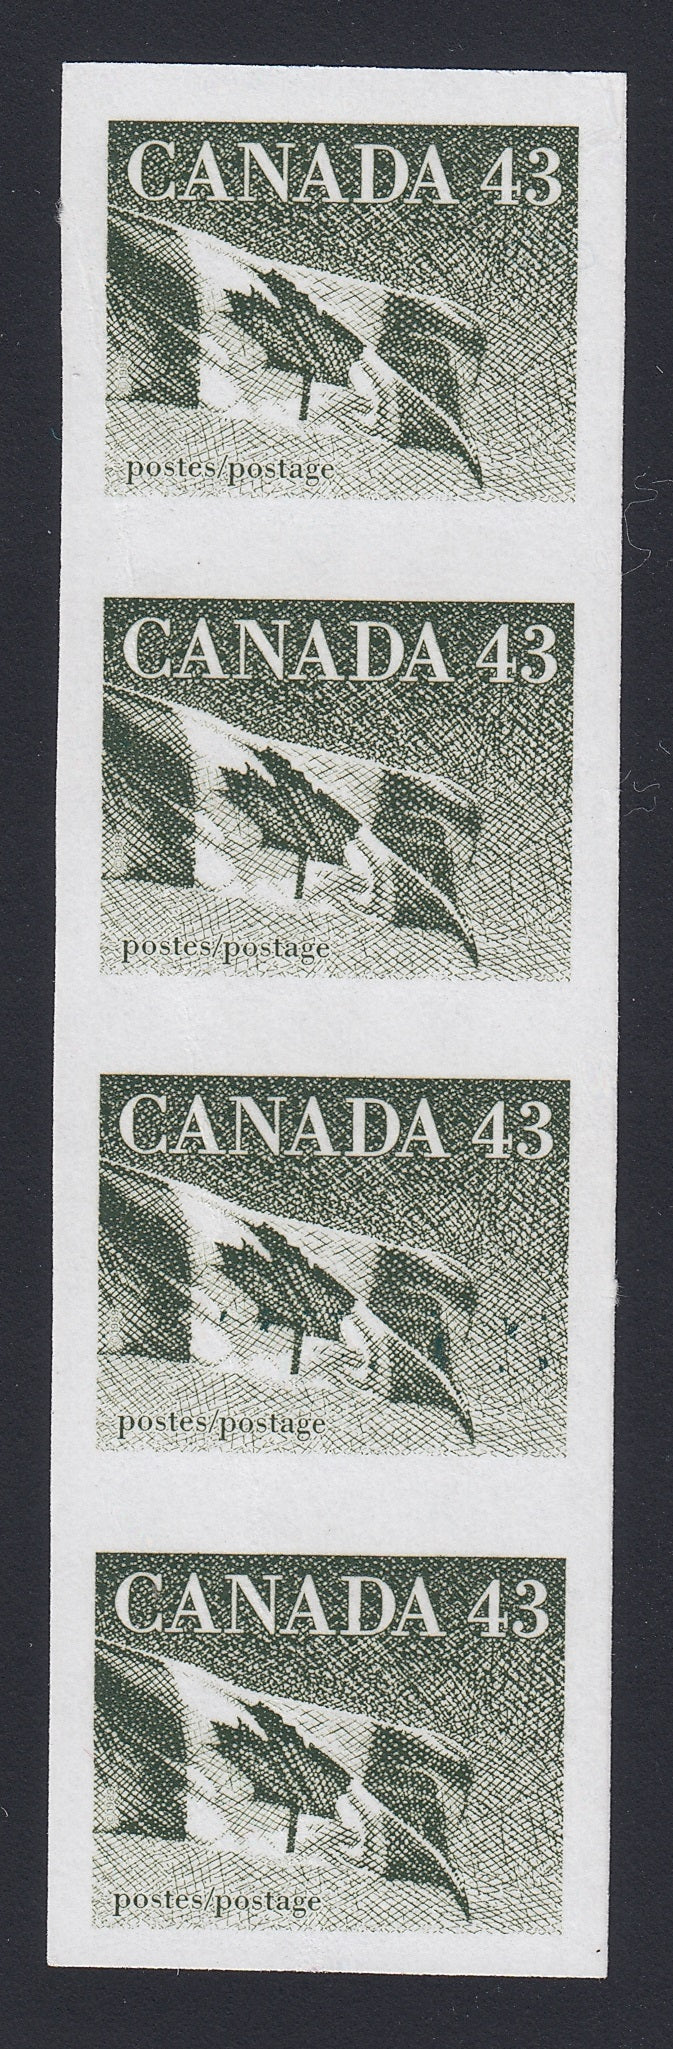 1395CA1802 - Canada #1395a - Mint Imperf Strip